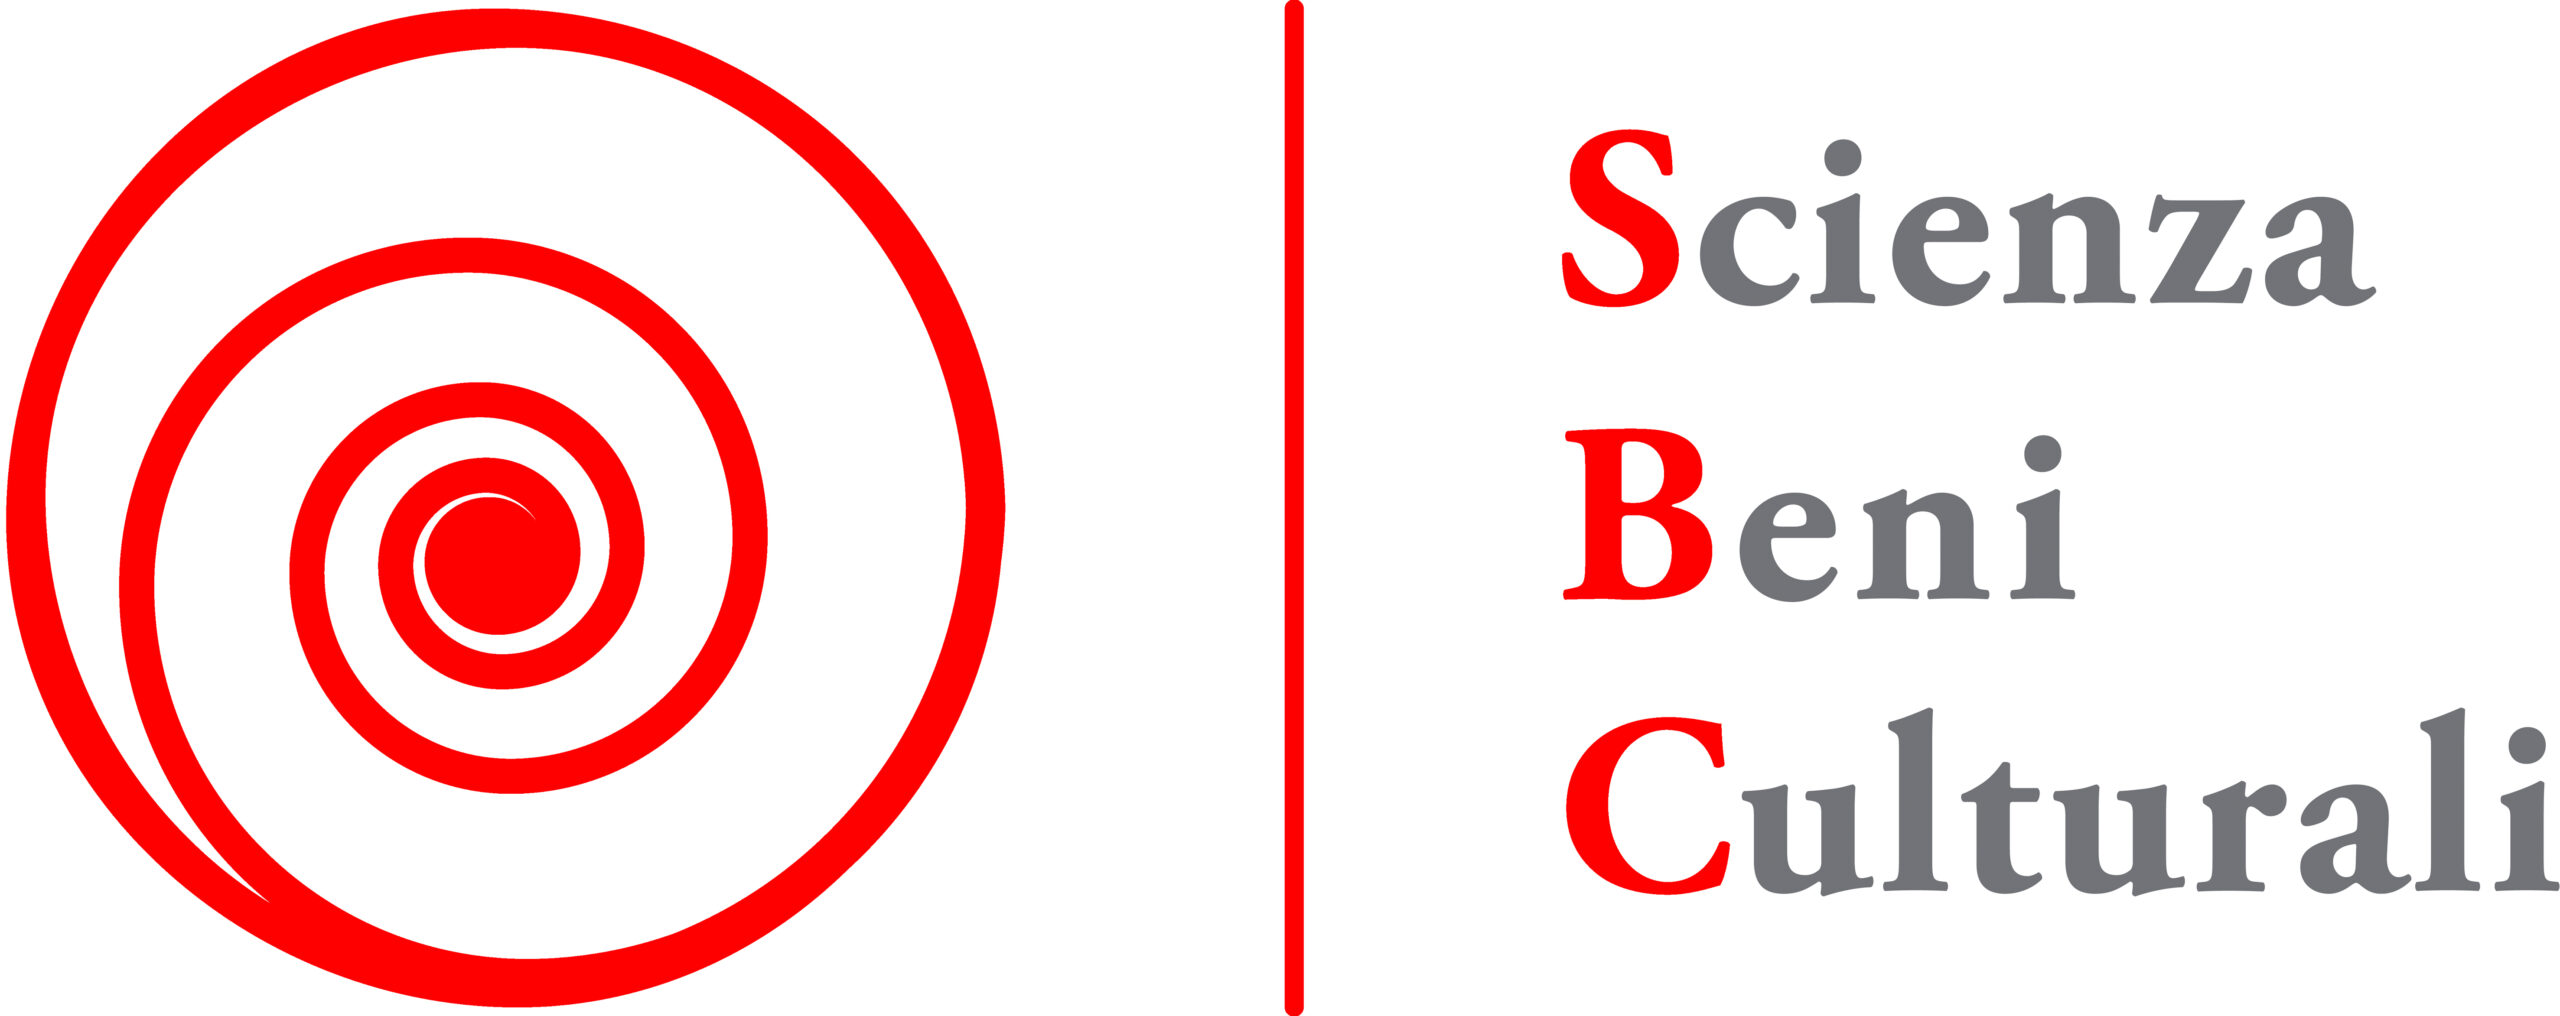 Logo-sbc-rosso-grigiotrasp-scaled.jpg